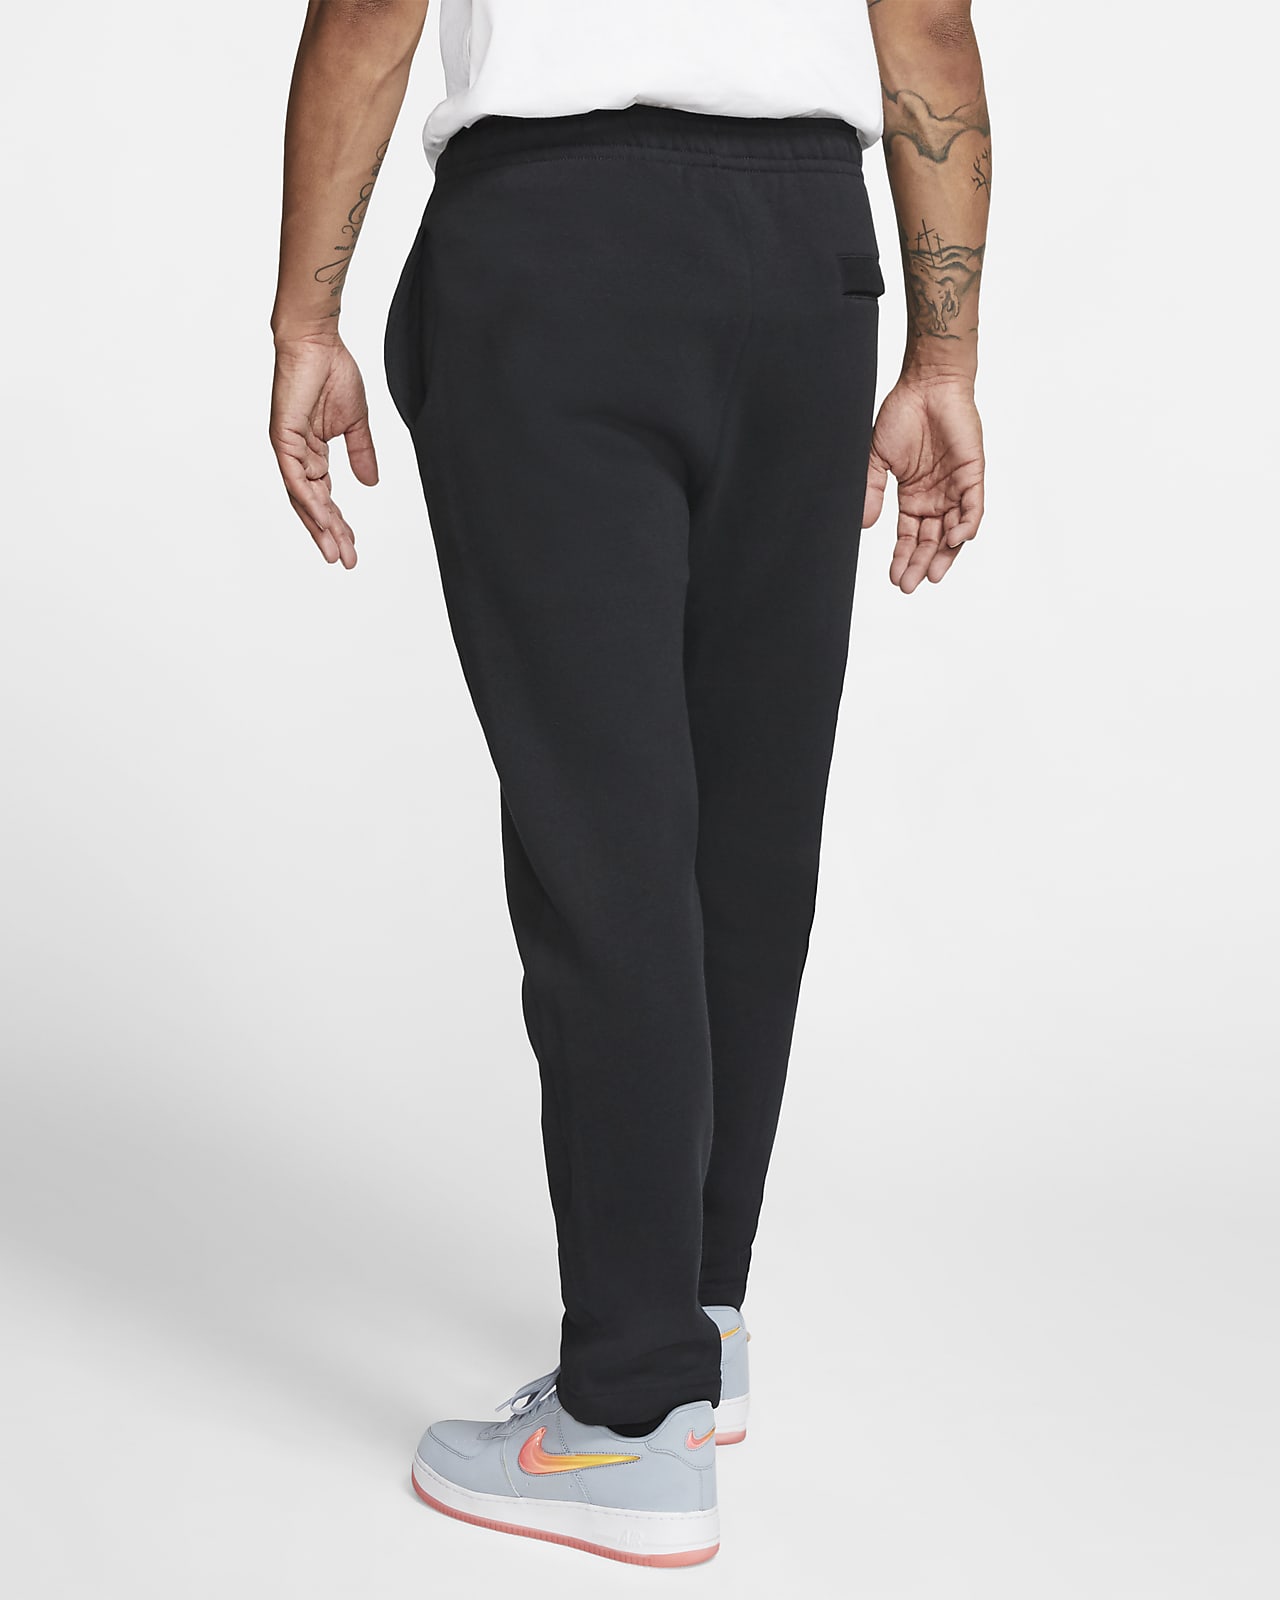 Nike Solid Black Track Pants Size L - 60% off